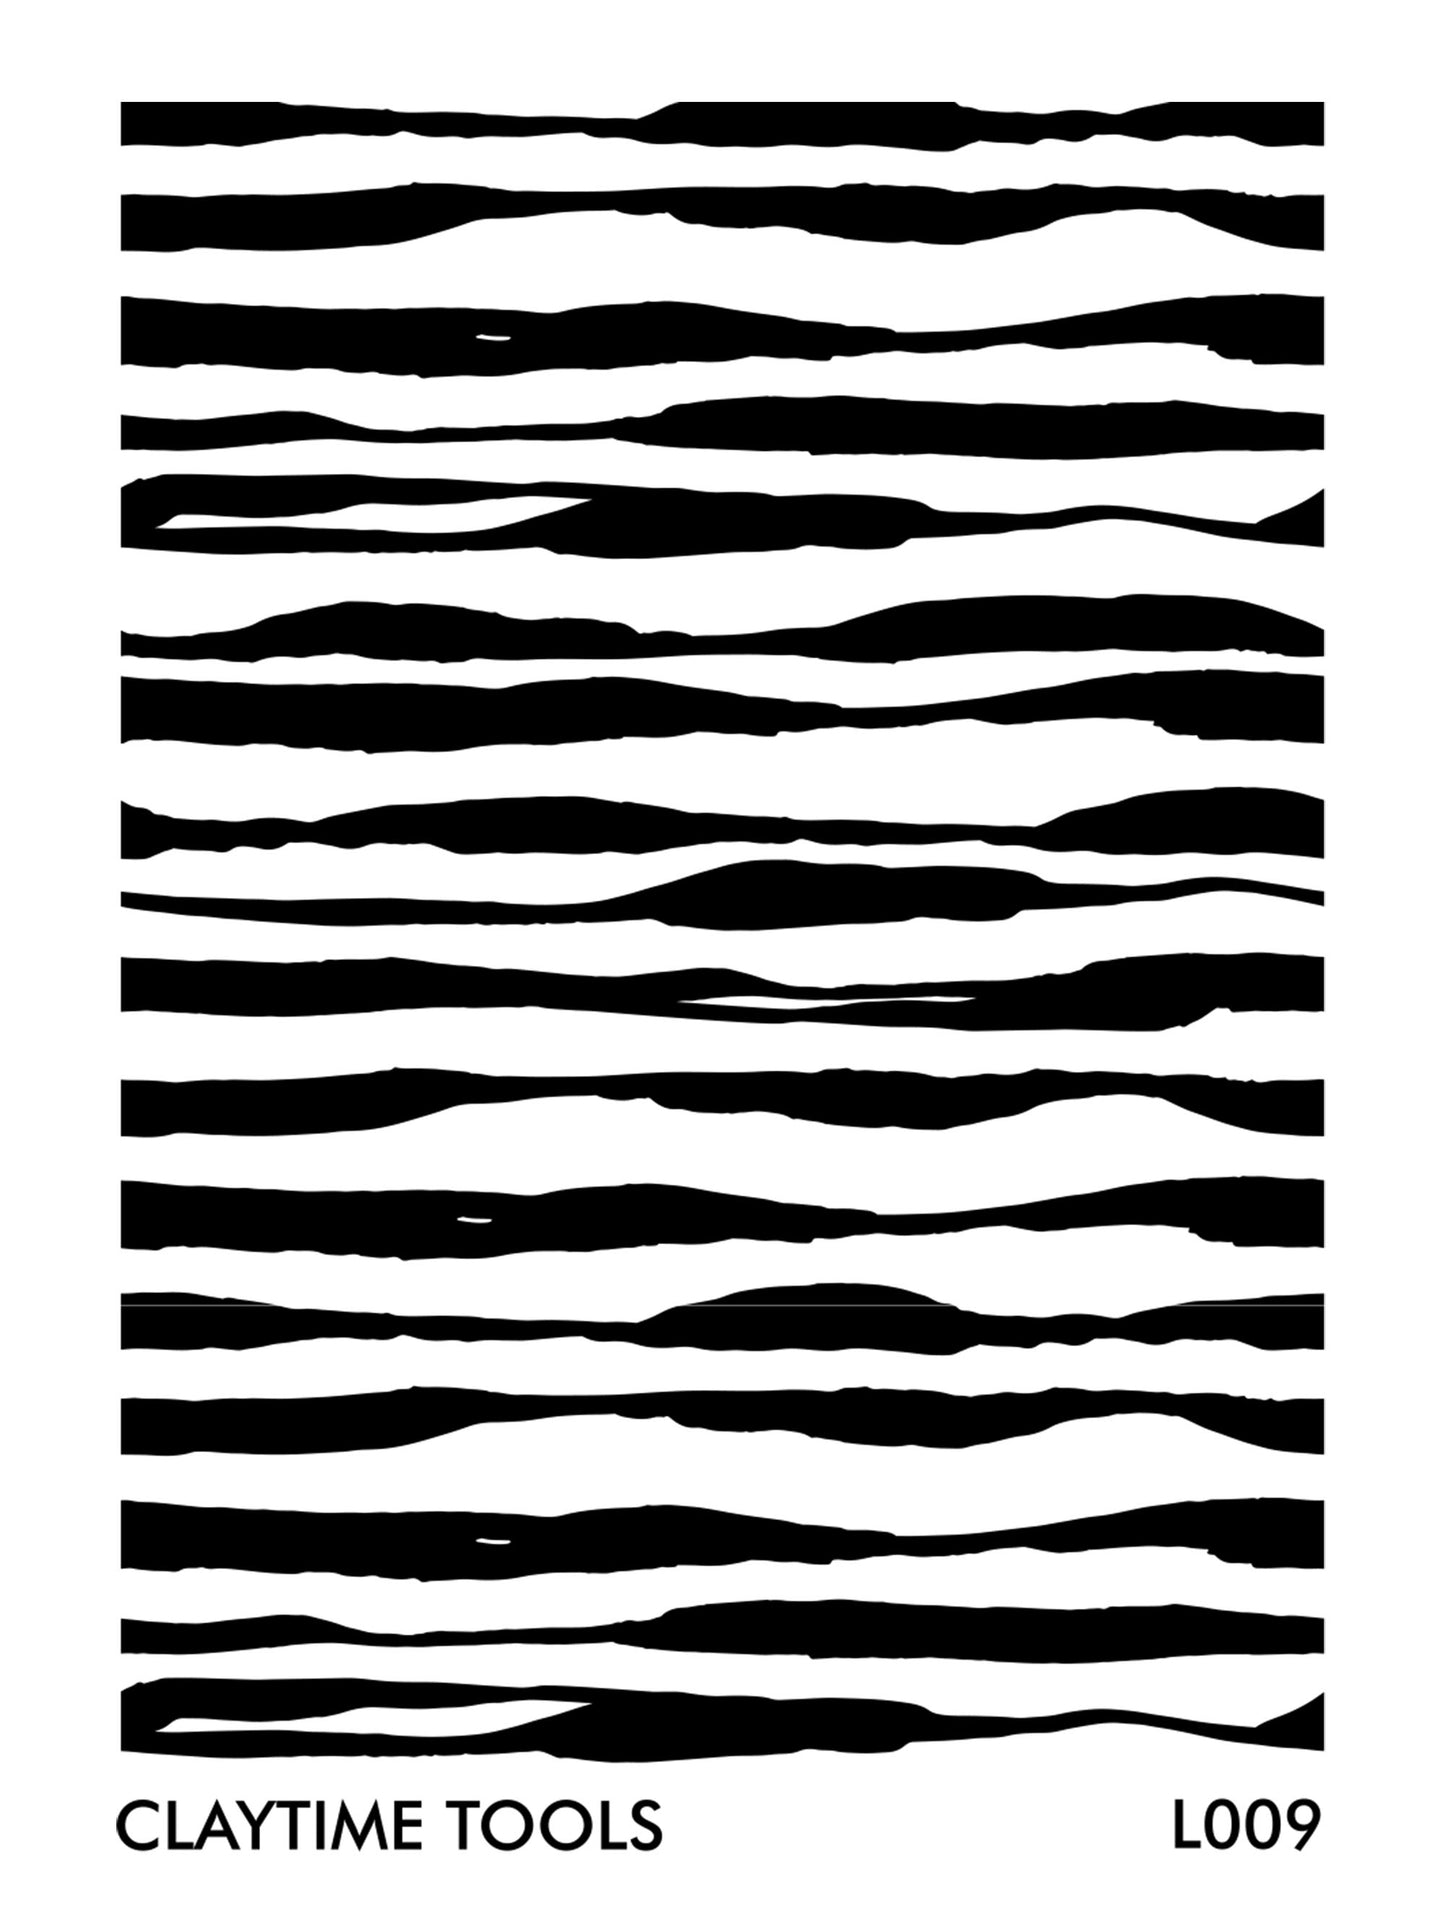 Animal Print pattern silkscreen on a white background.